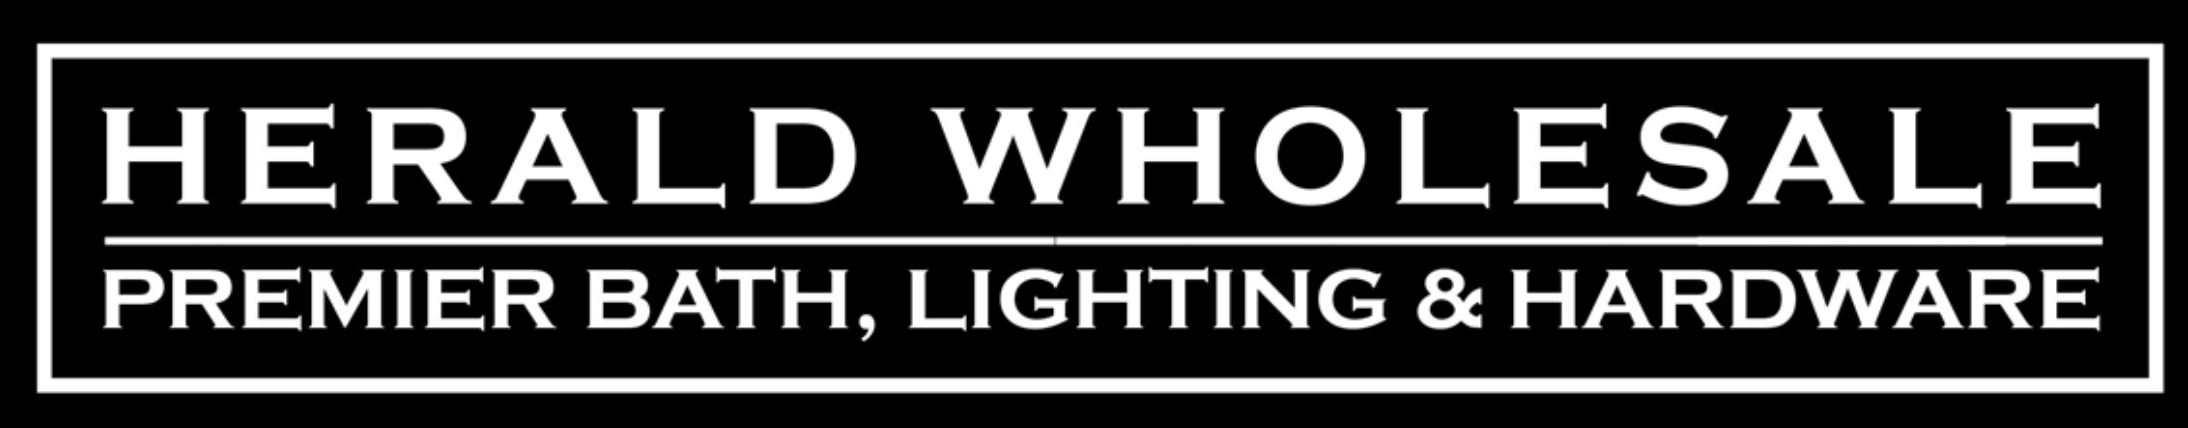 Herald Wholesale Premier Bath Lighting & Hardware Logo